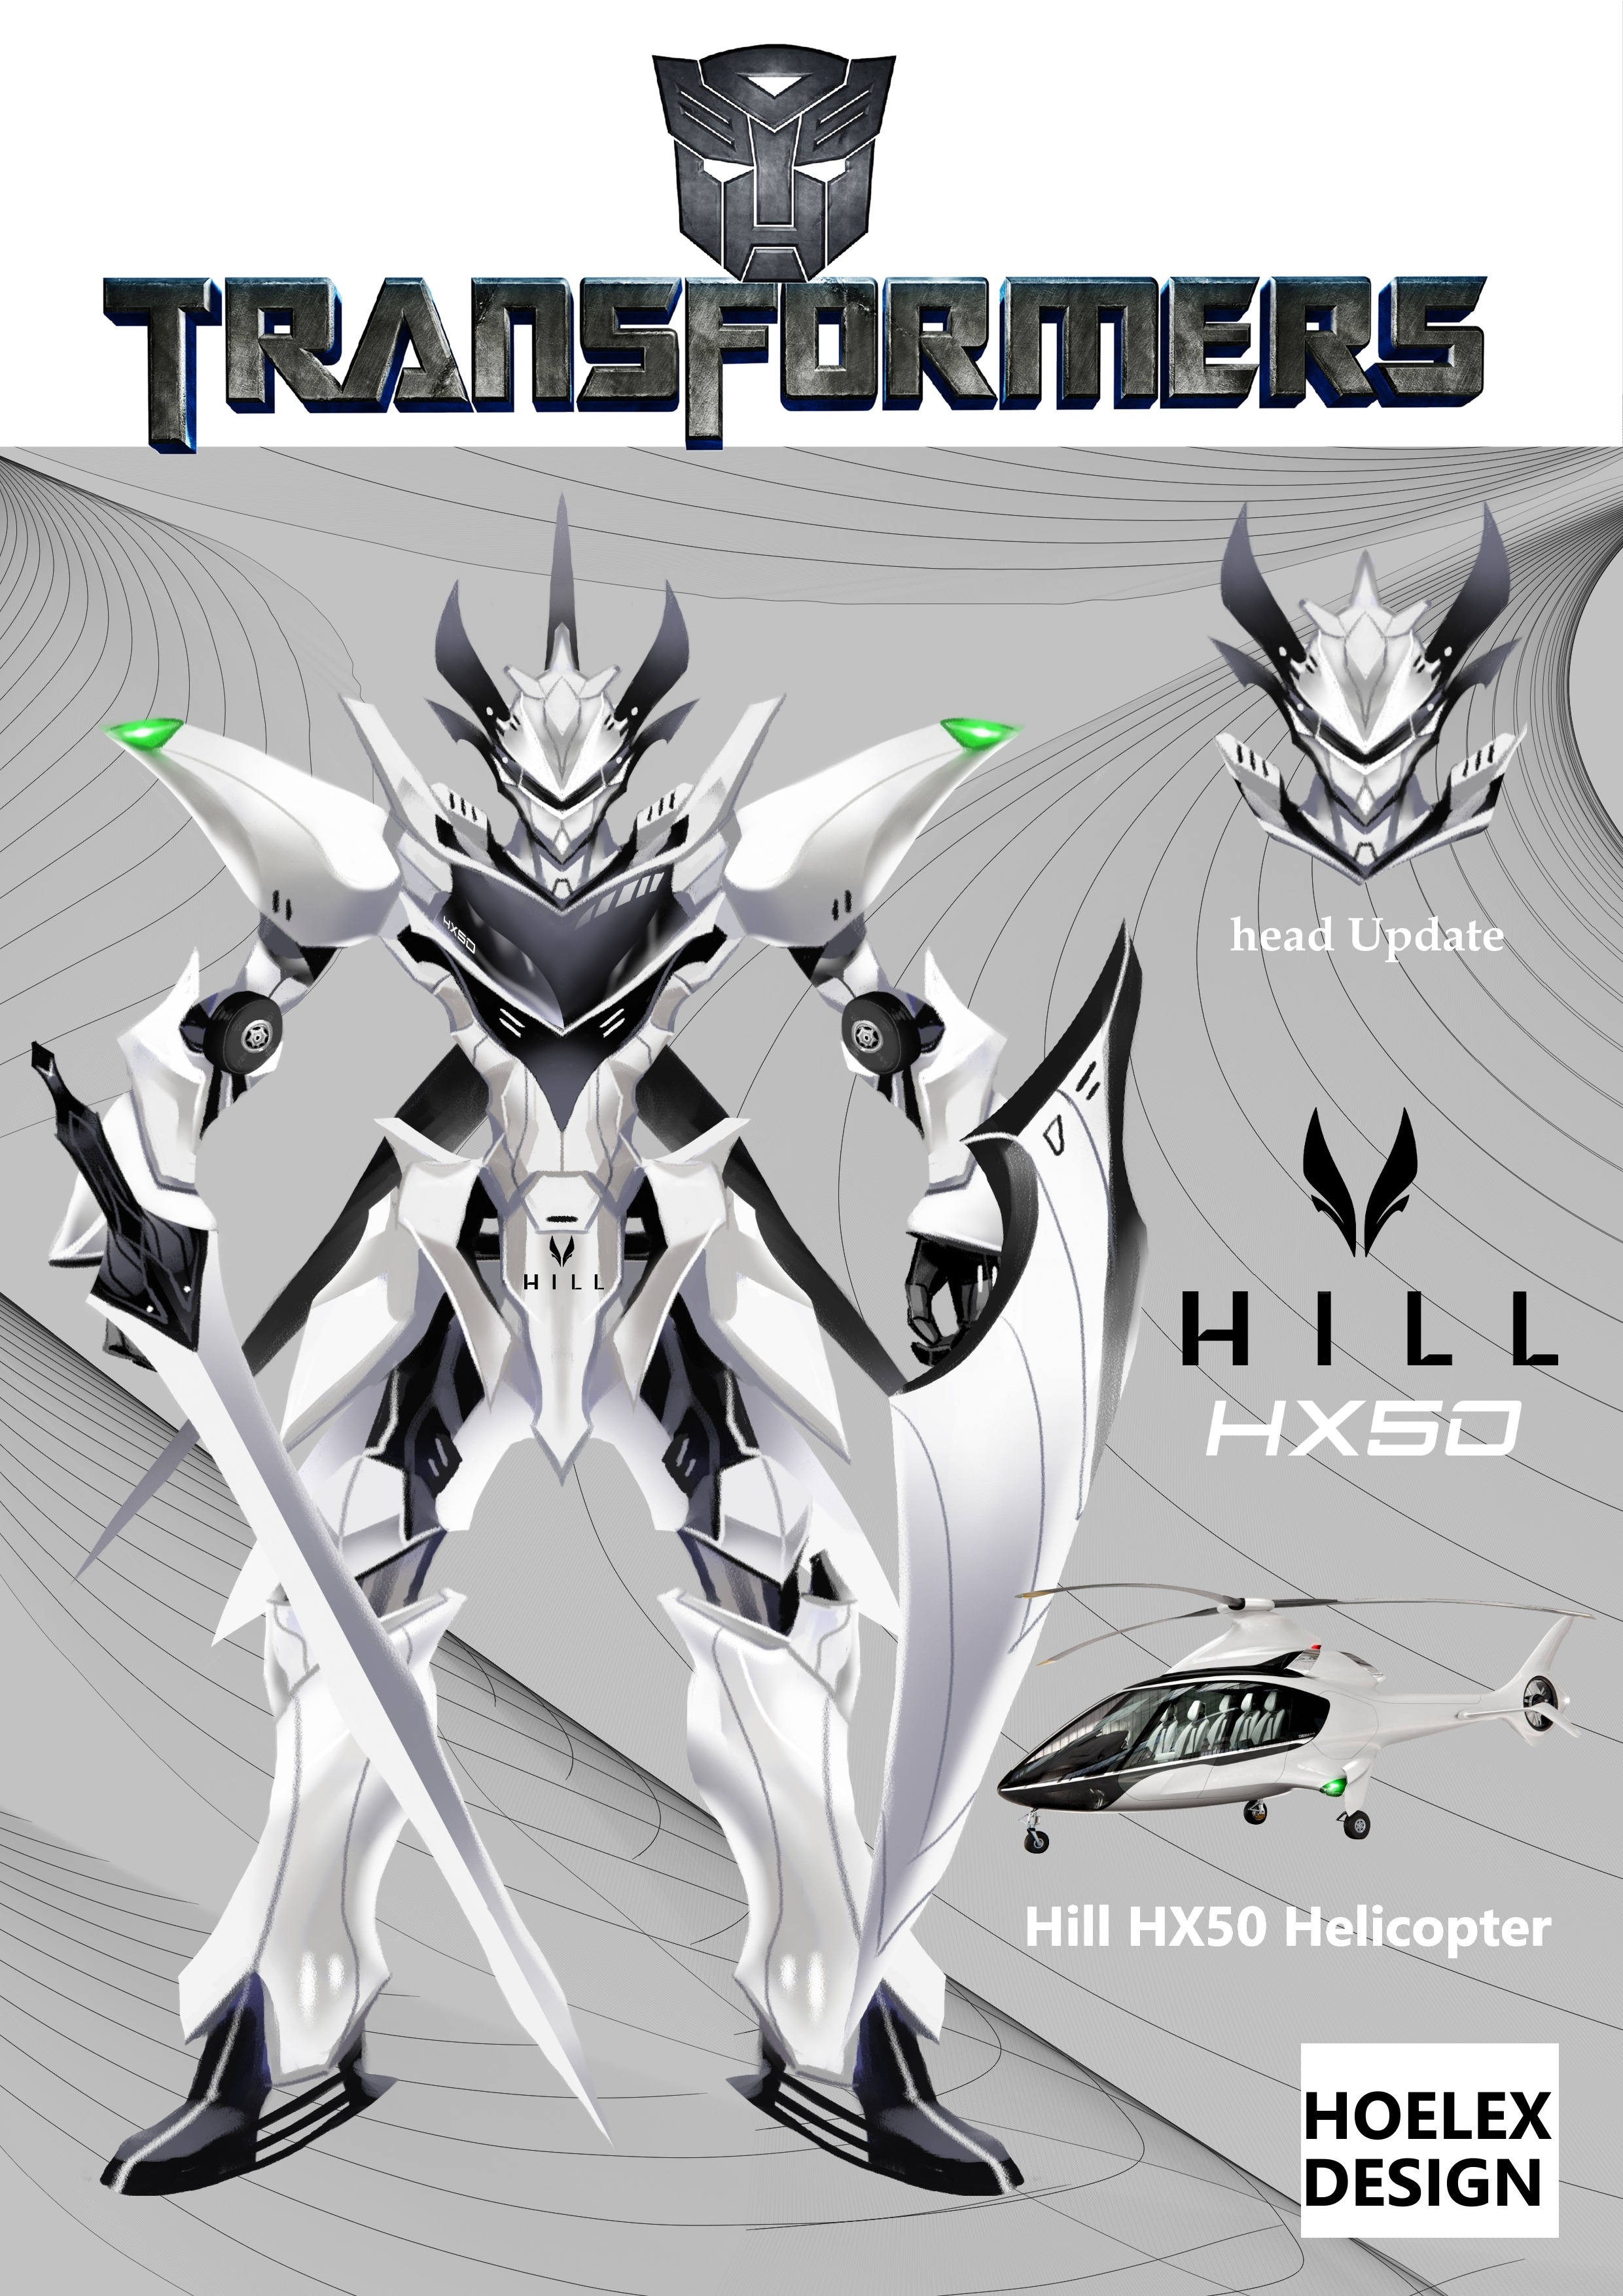 Transformrs.變形金剛-希爾直升機Hill HX50 Helicopter-hoelex(背景).jpg